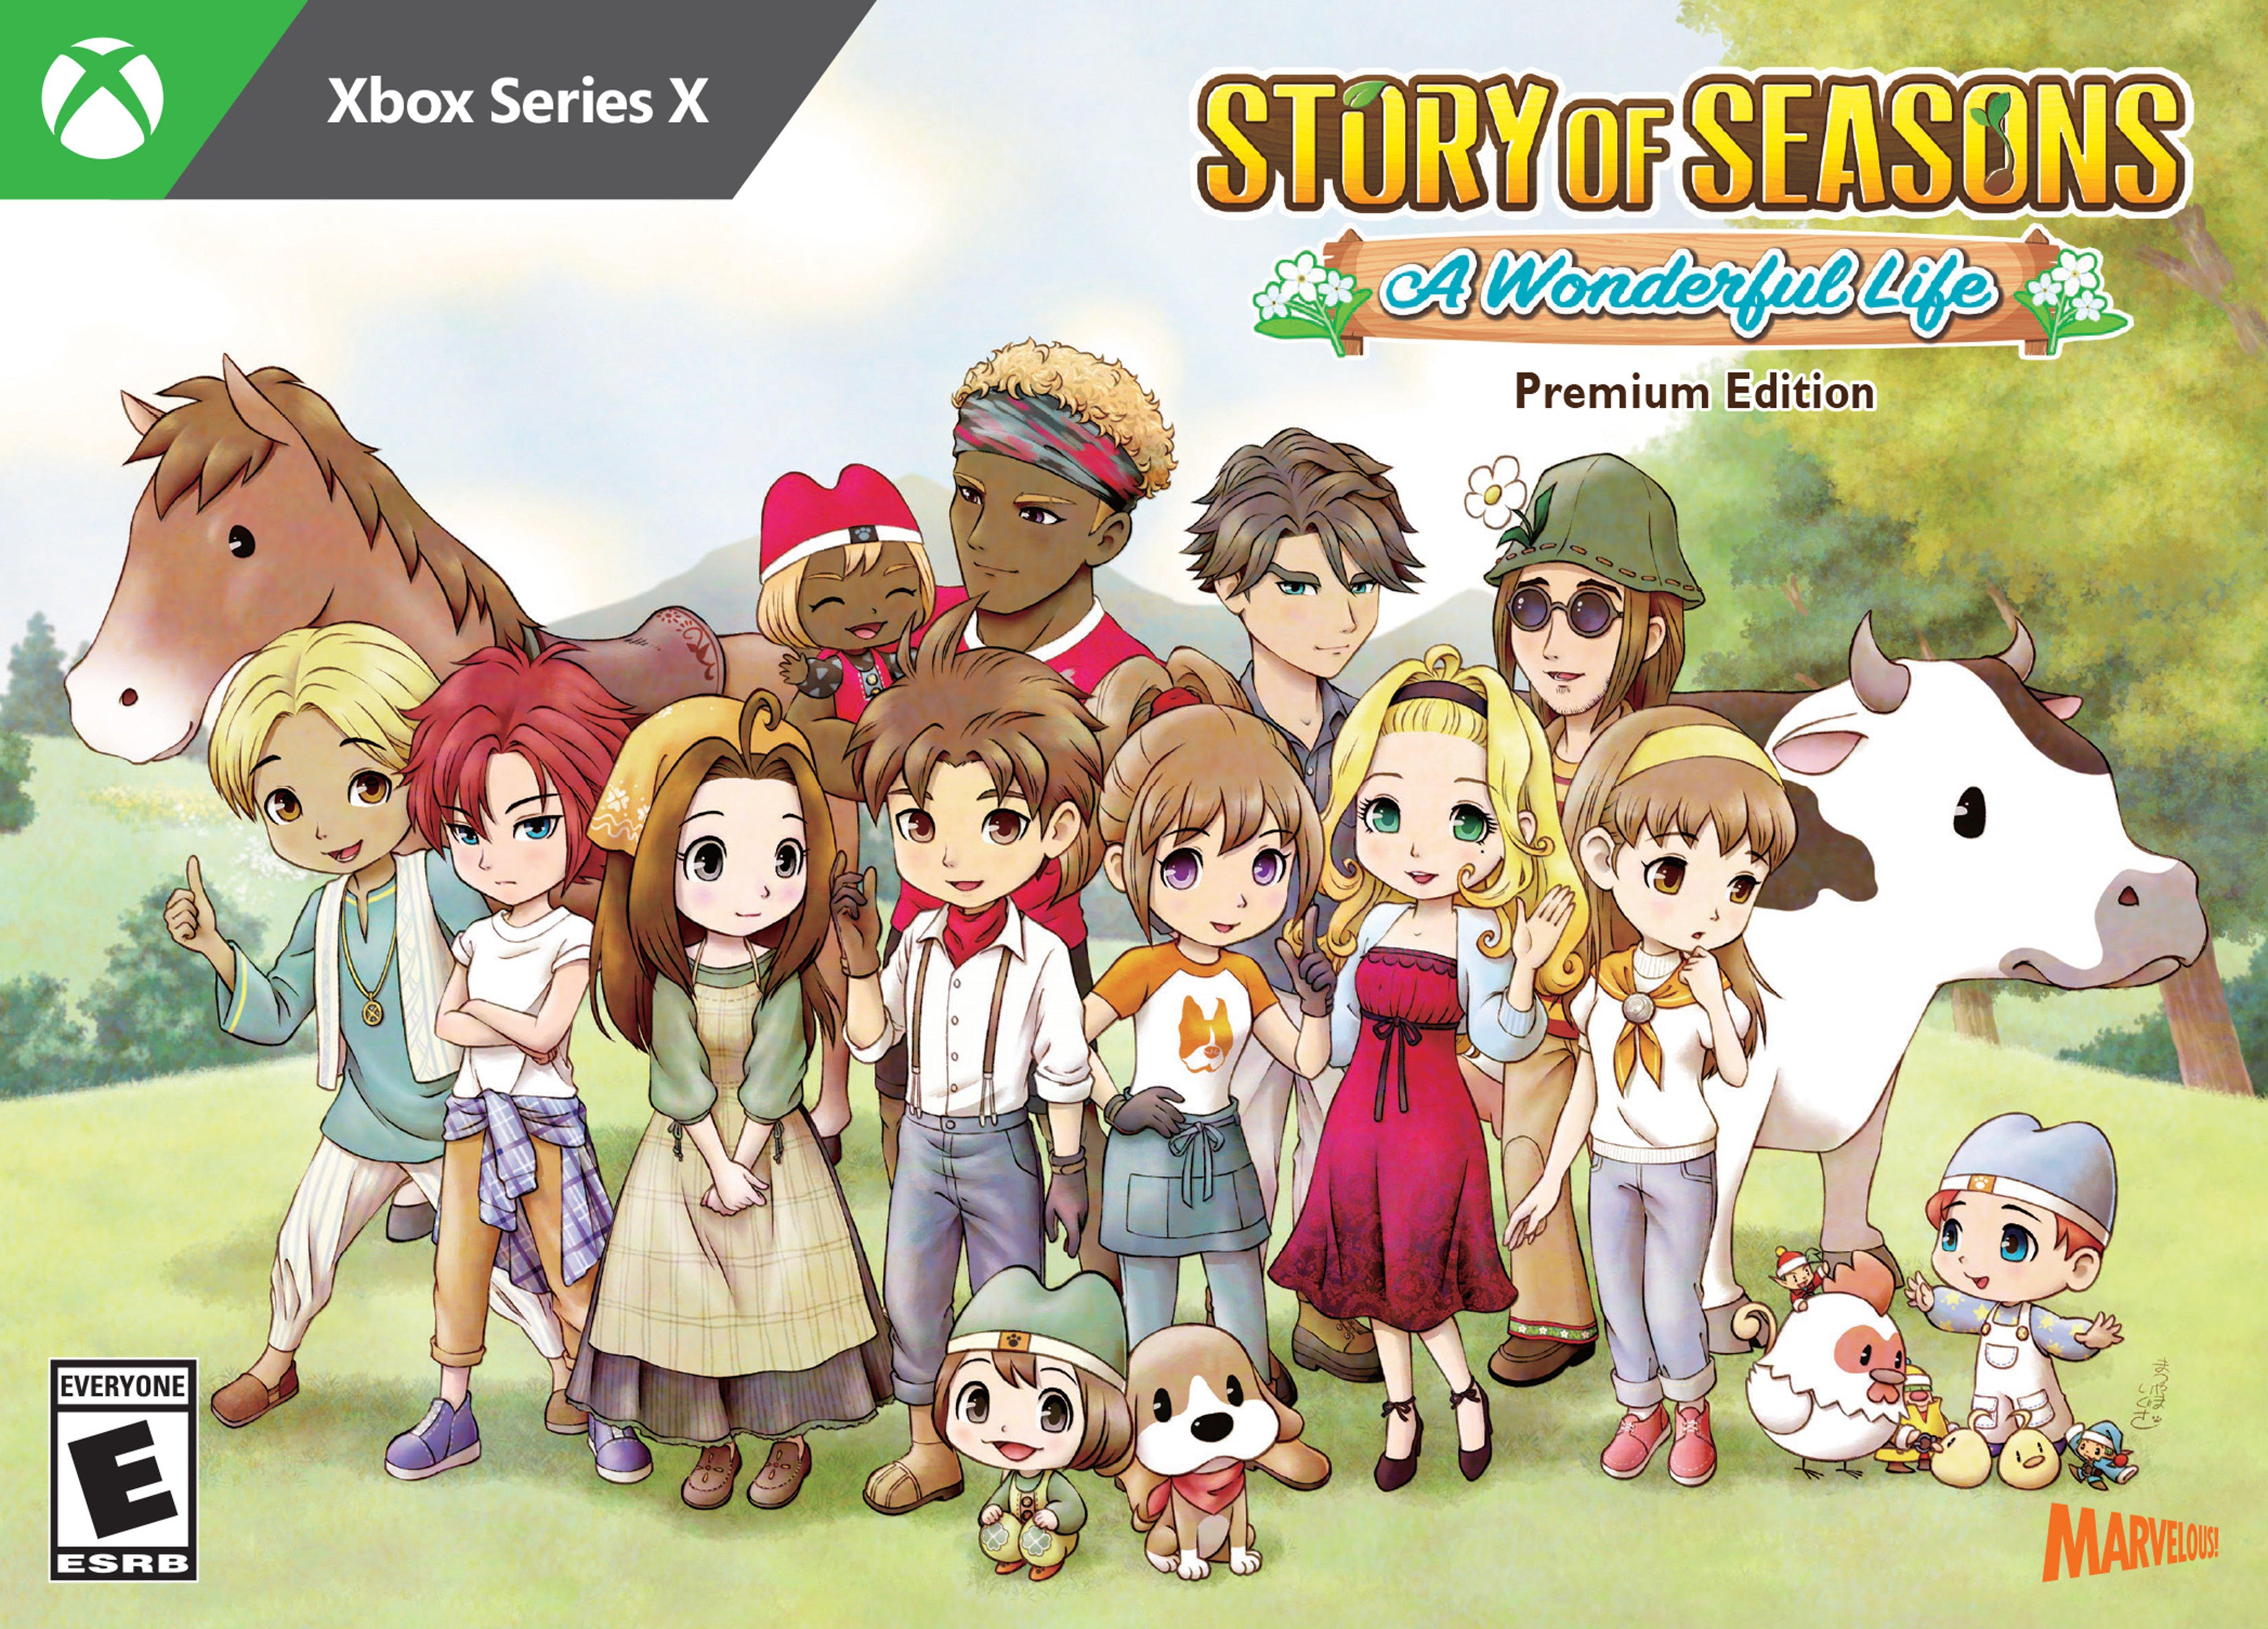 Farm Story 2™ na App Store